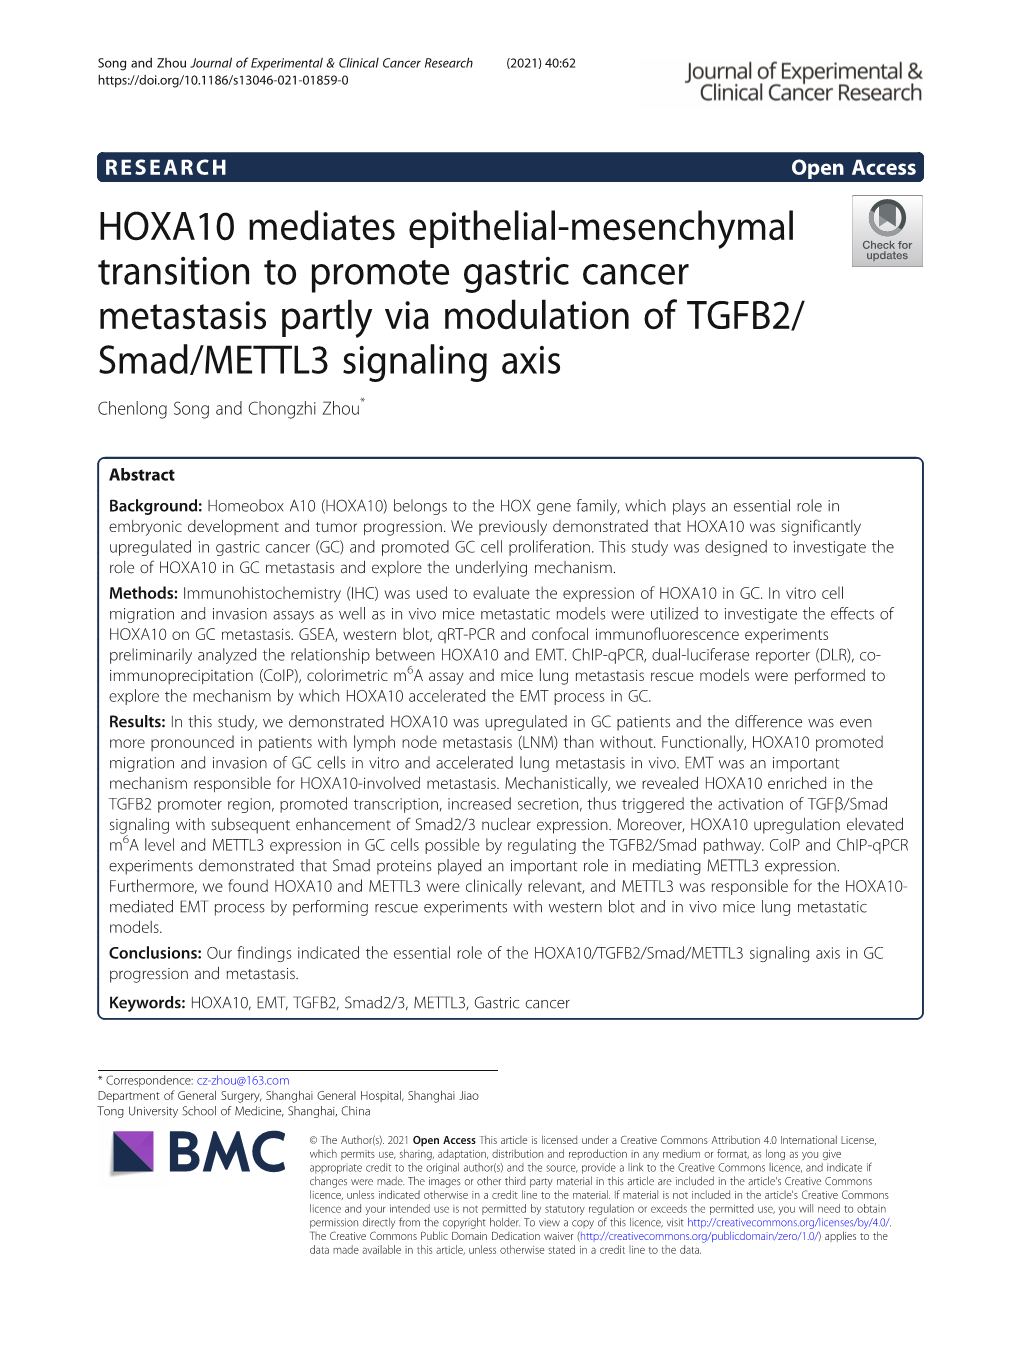 HOXA10 Mediates Epithelial-Mesenchymal Transition